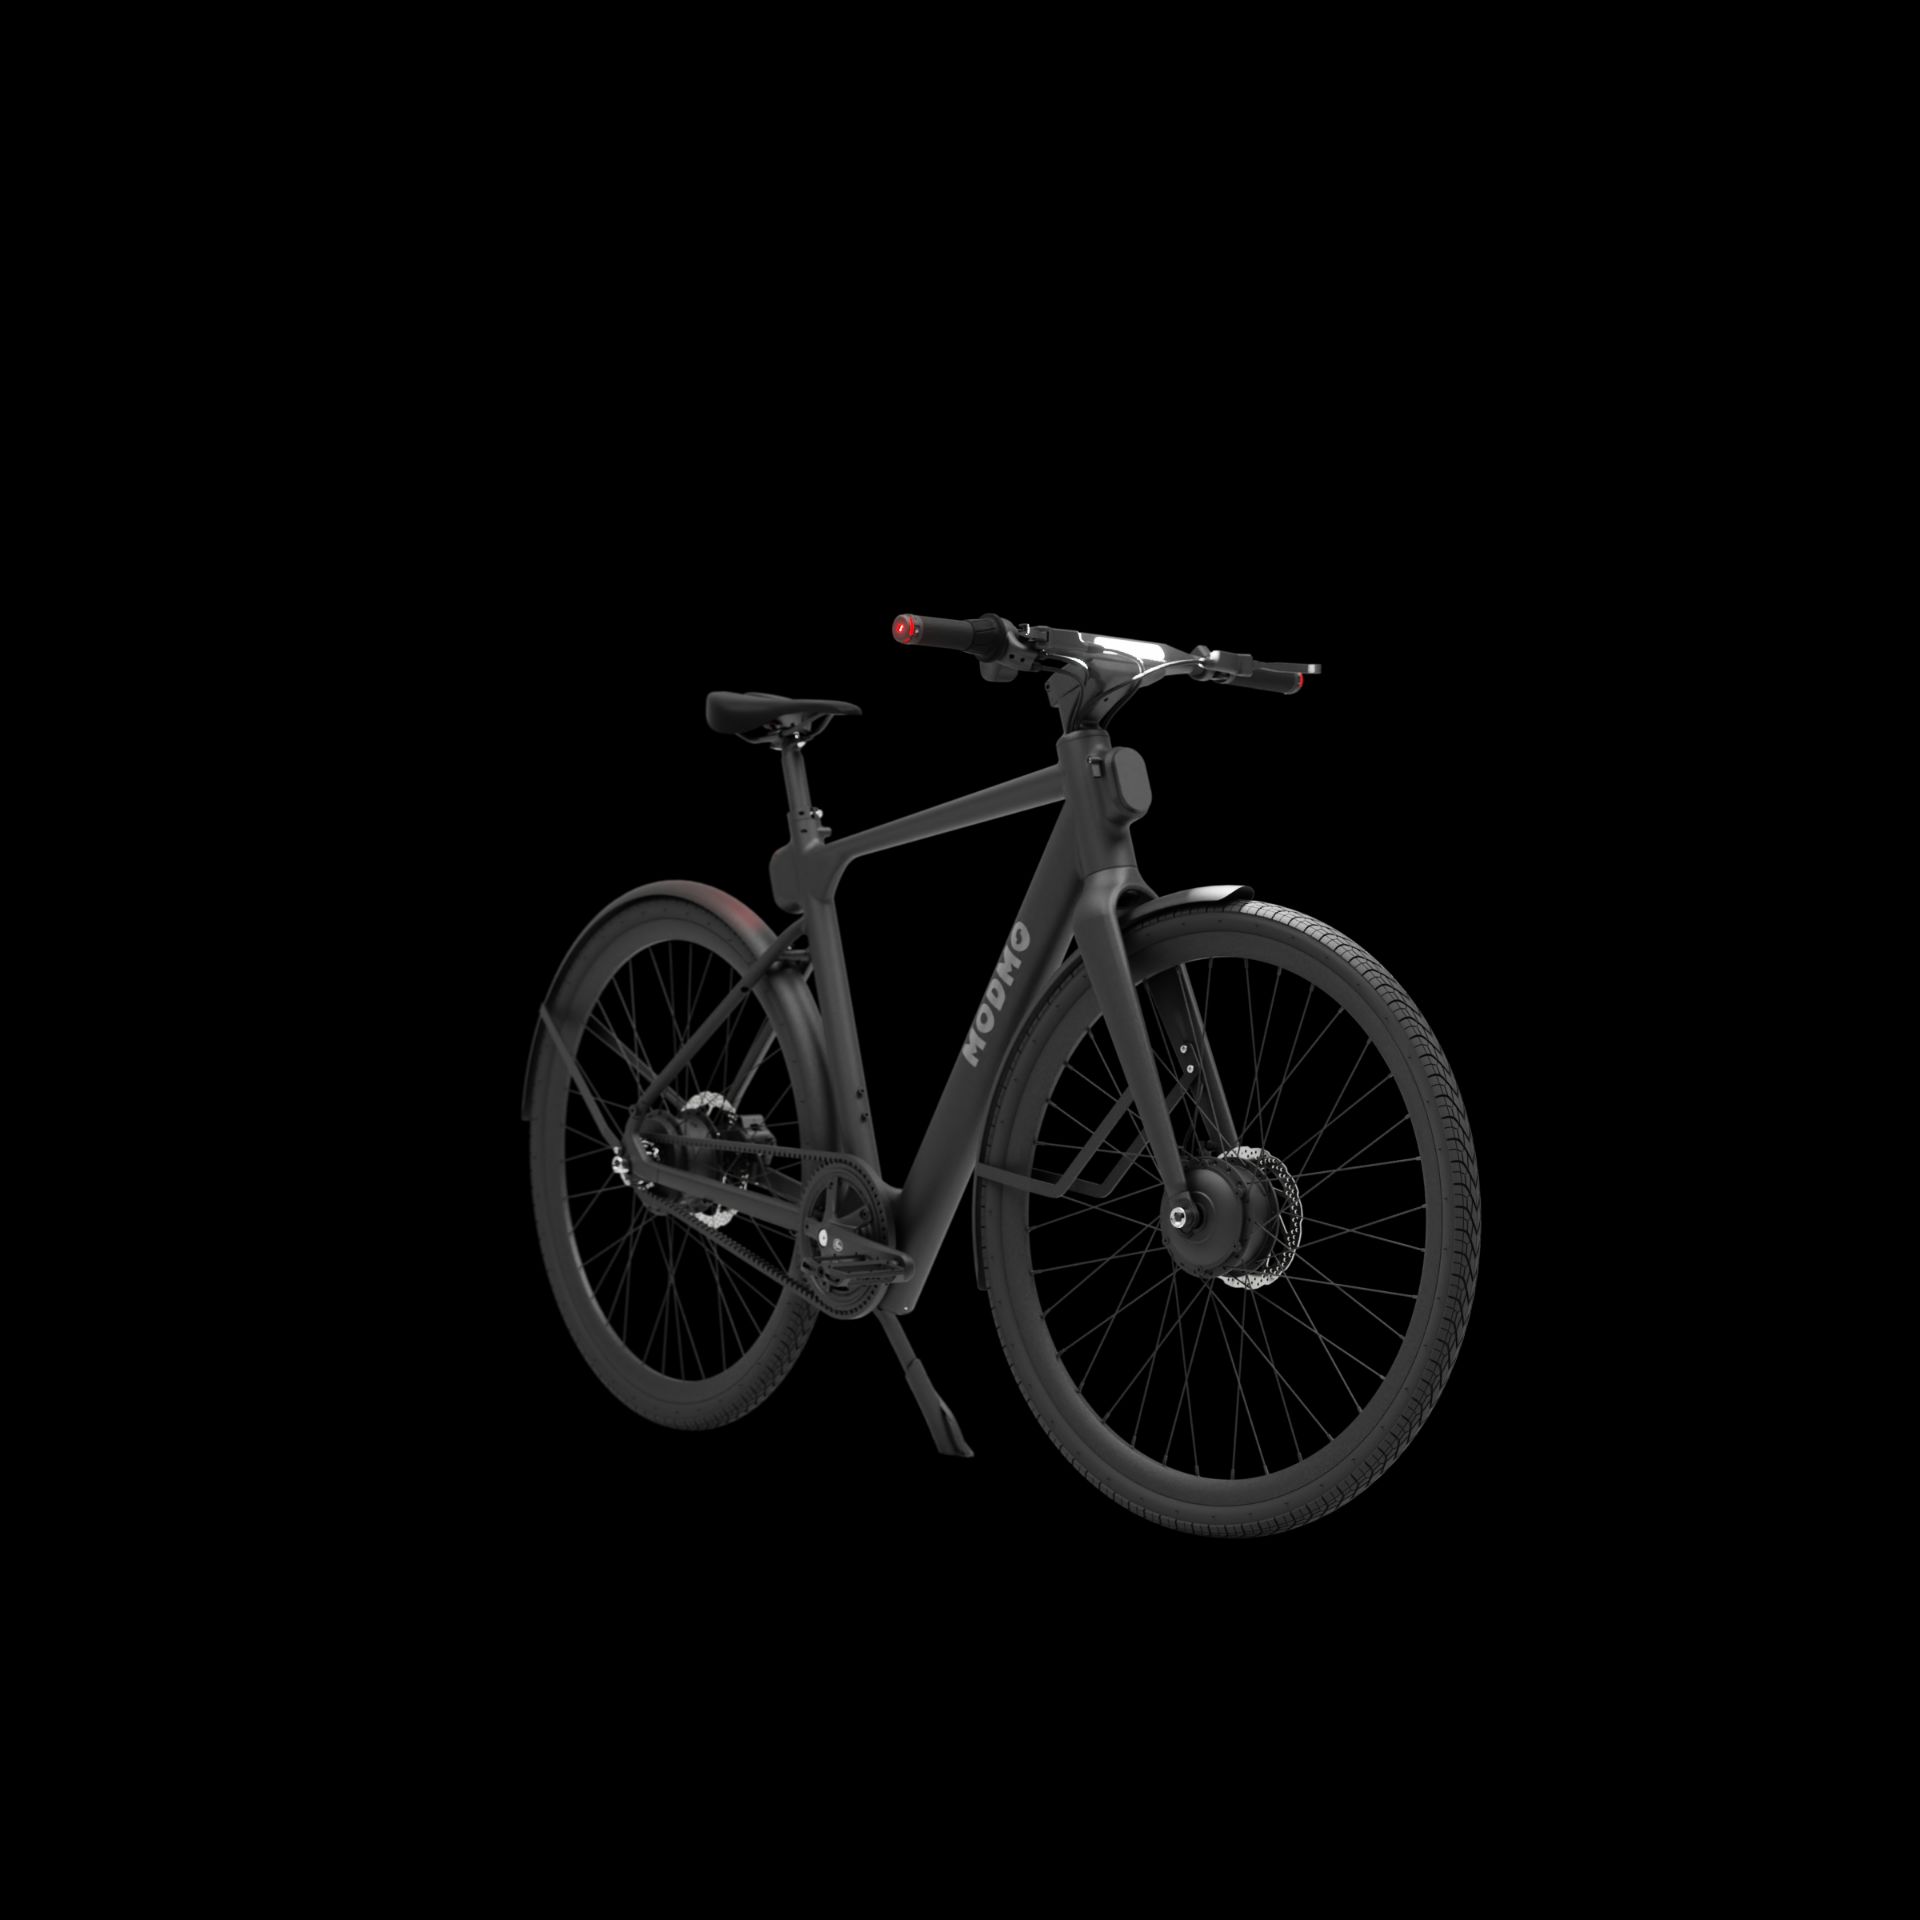 Modmo Saigon+ Electric Bicycle - RRP £2800 - Size L (Rider 175-190cm) - Image 4 of 19